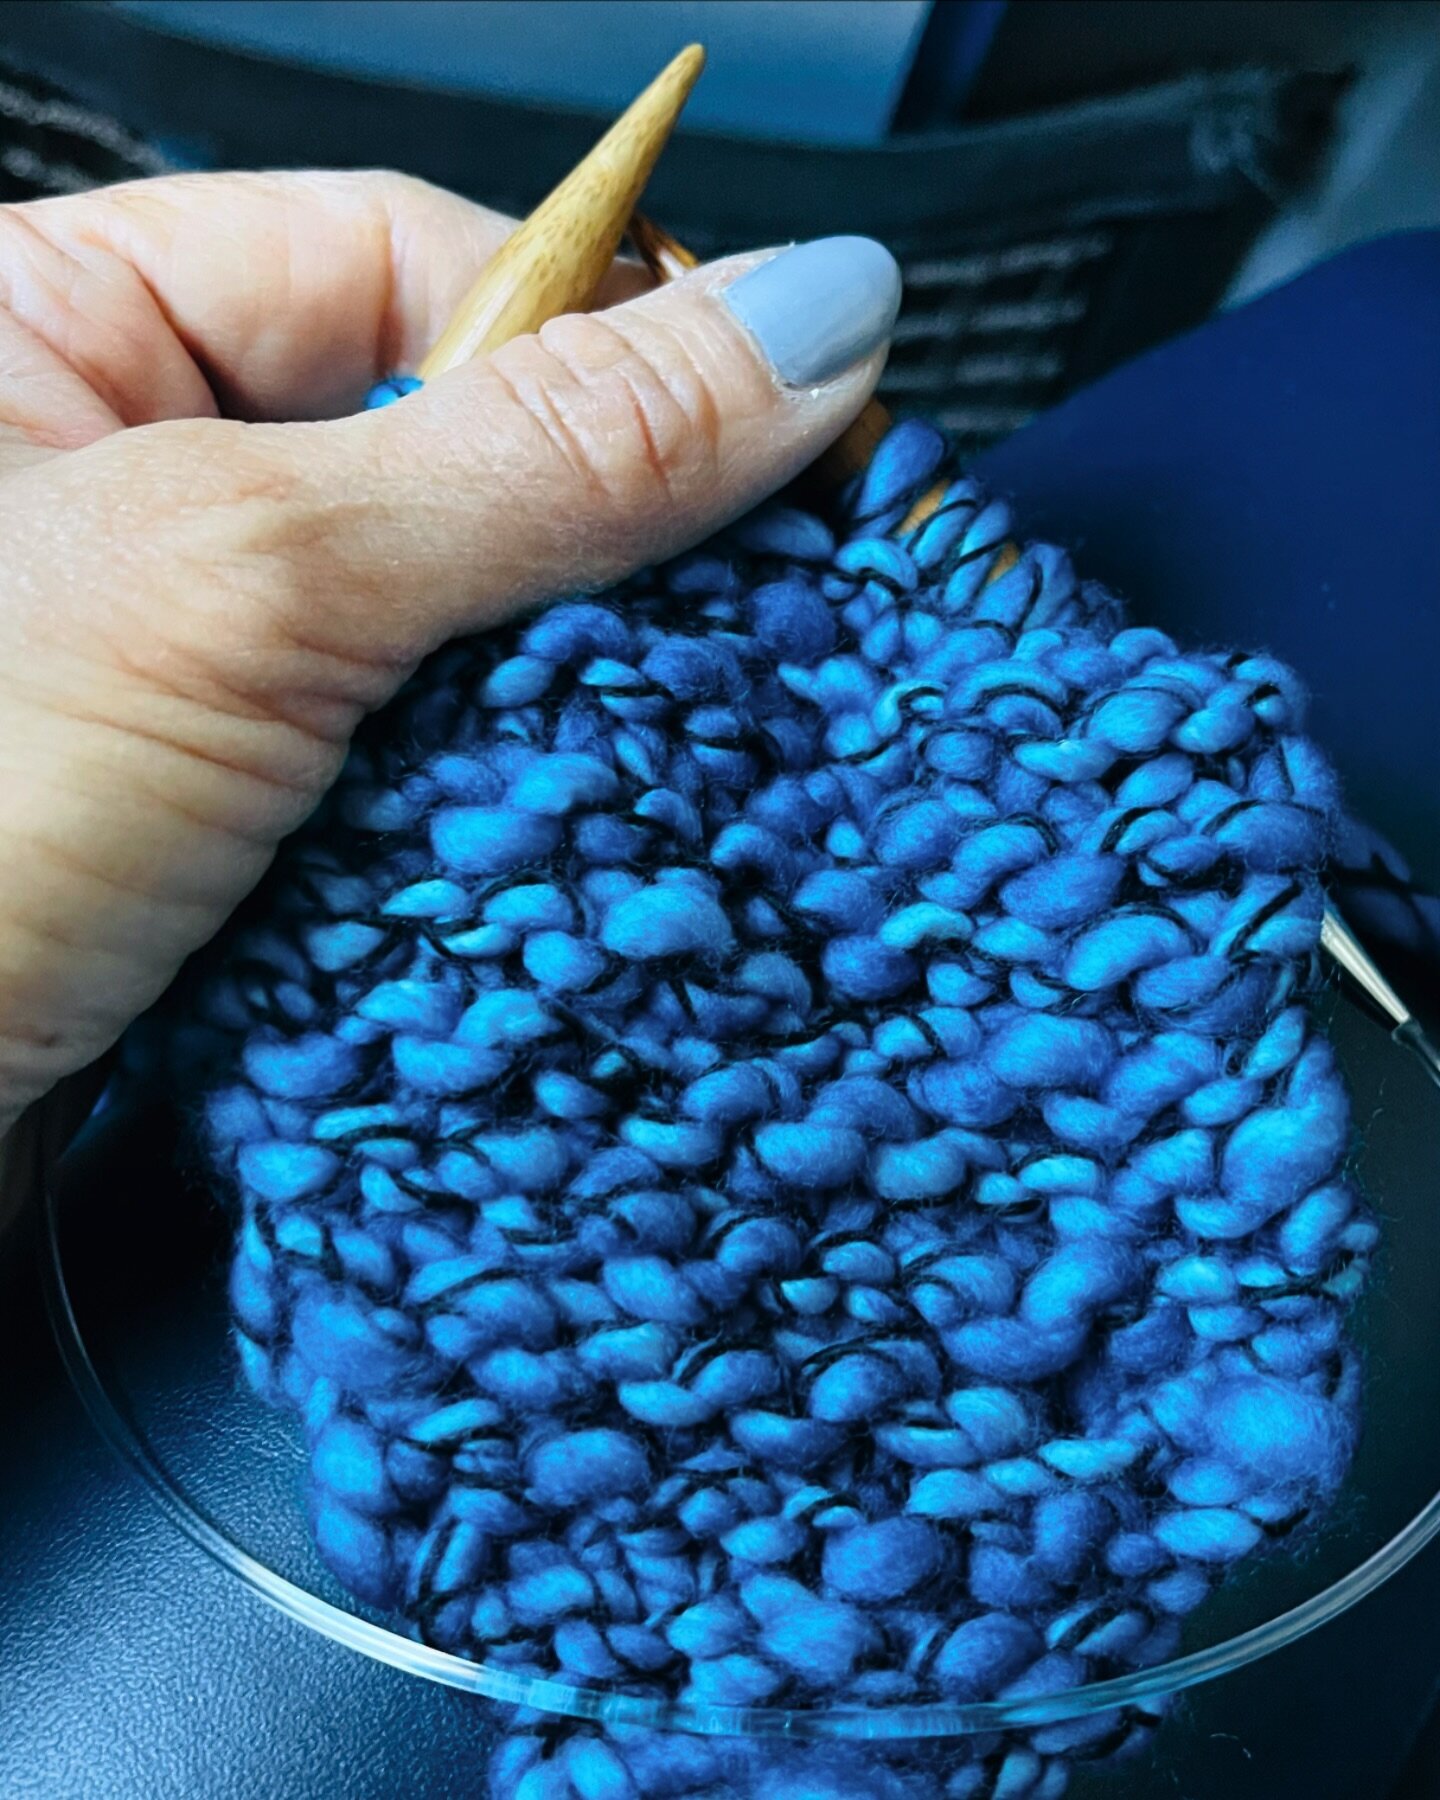 Blue state of mind&hellip; #justbecozy 

#knit #knitting #knitwear #knitter #knitting_inspiration #knitters #blue #blueheeler #blueheelers #yarn